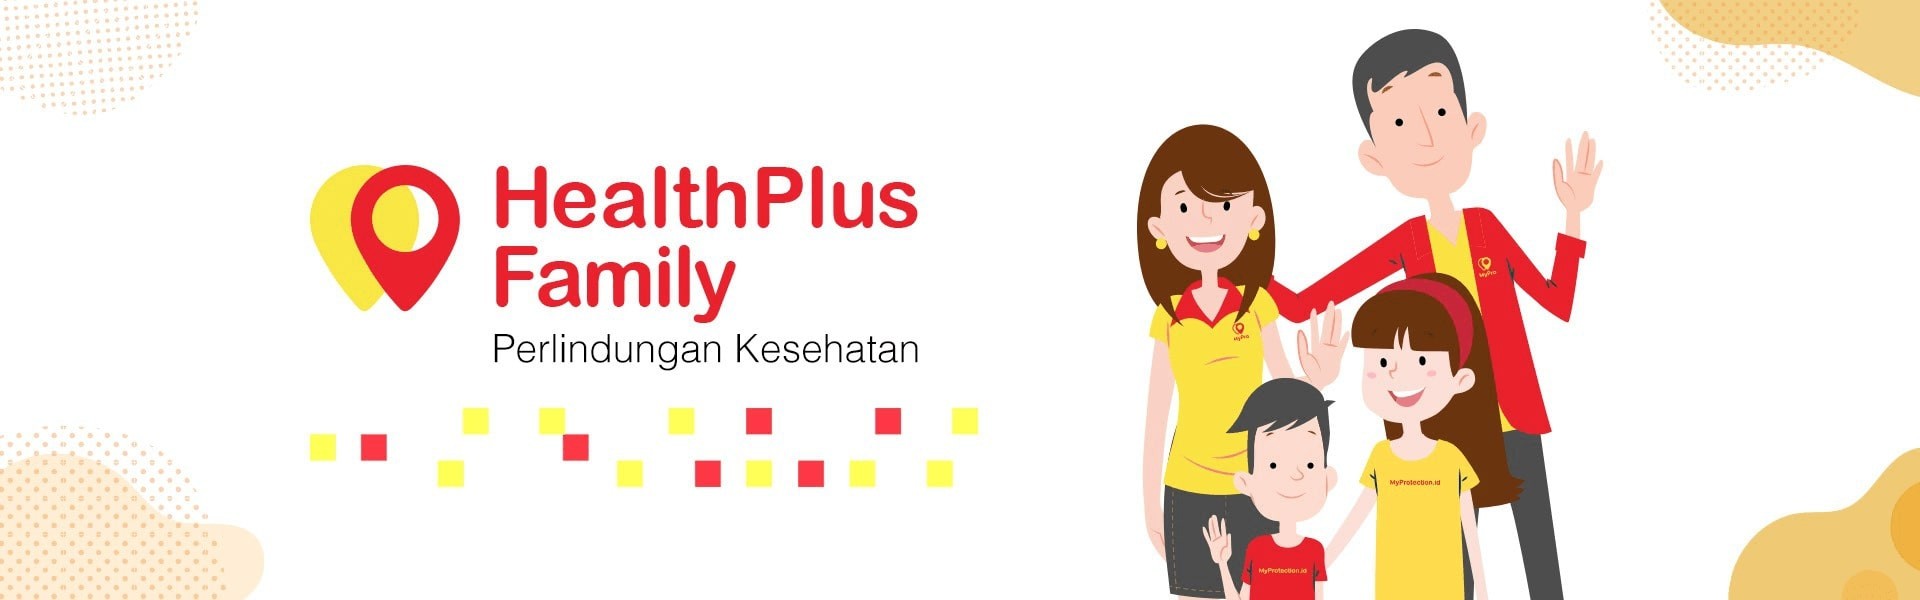 HealthPlus Family